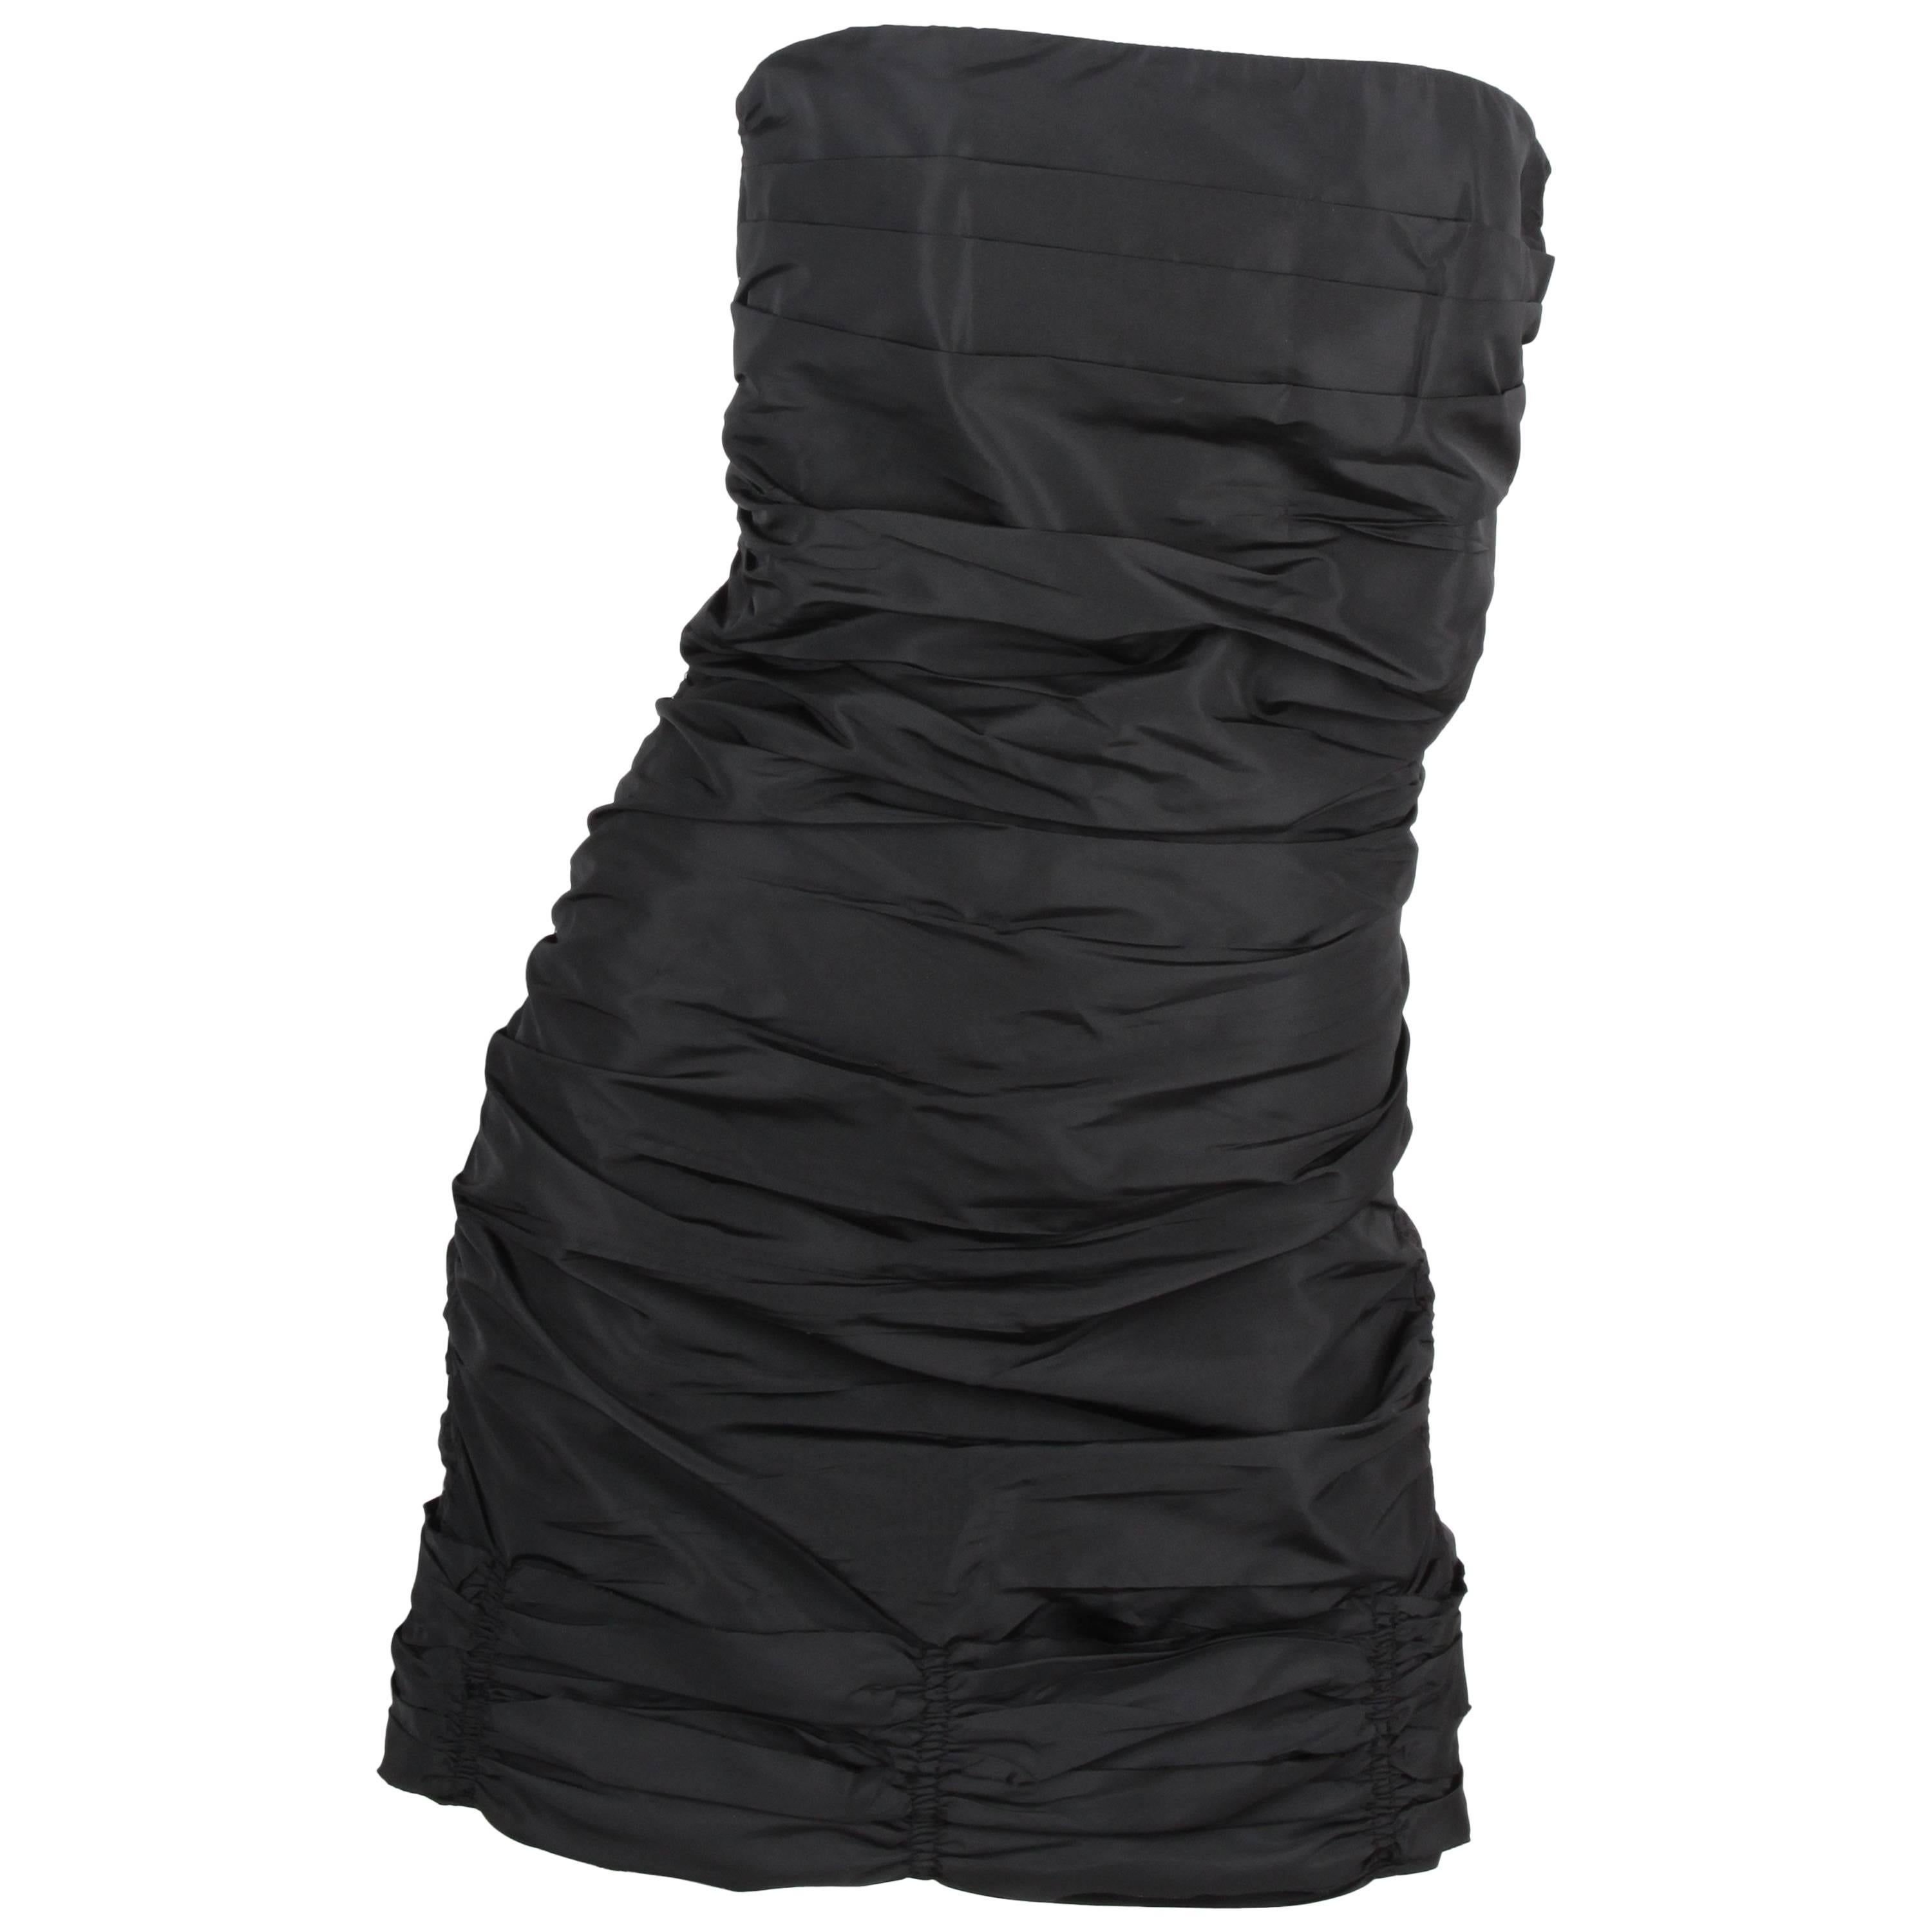   MIU MIU Strapless Dress - black   MIU MIU Strapless Dress - black MIU MIU Stra For Sale